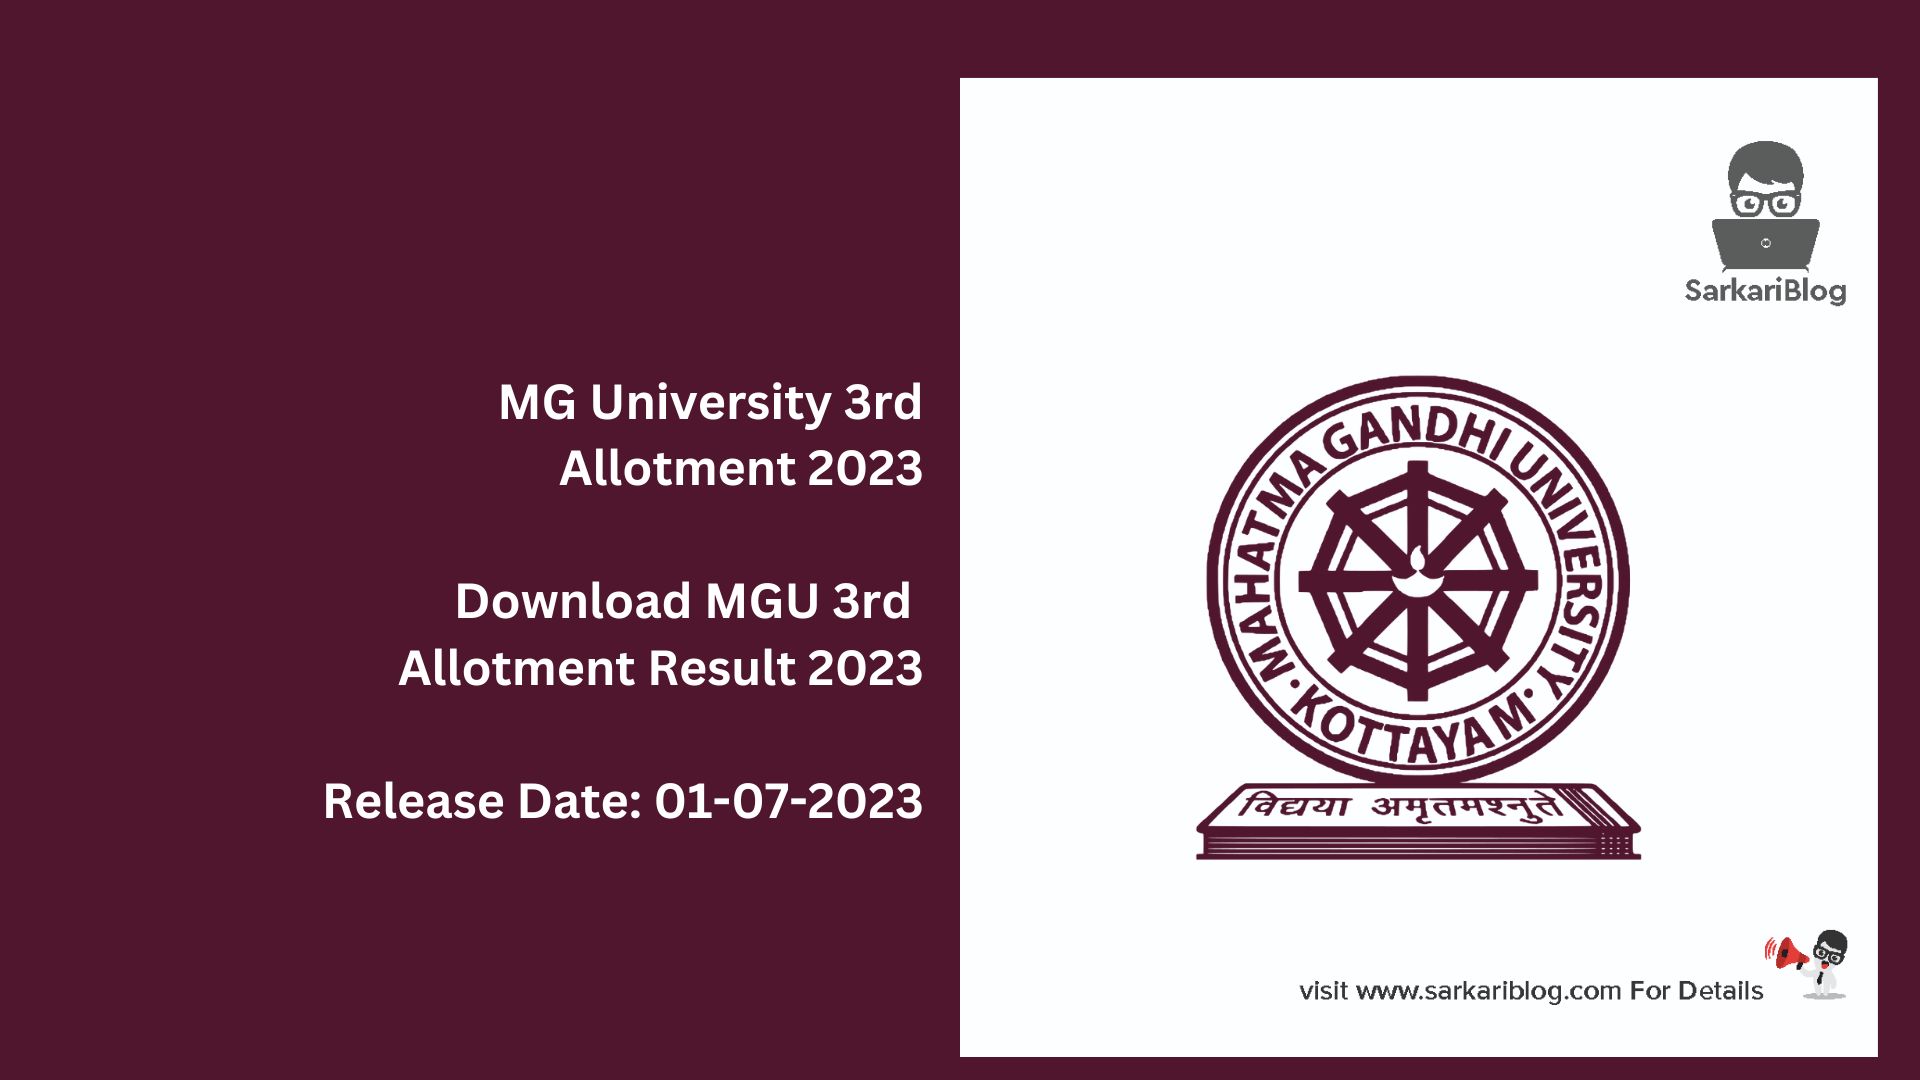 MG University 3rd Allotment 2023